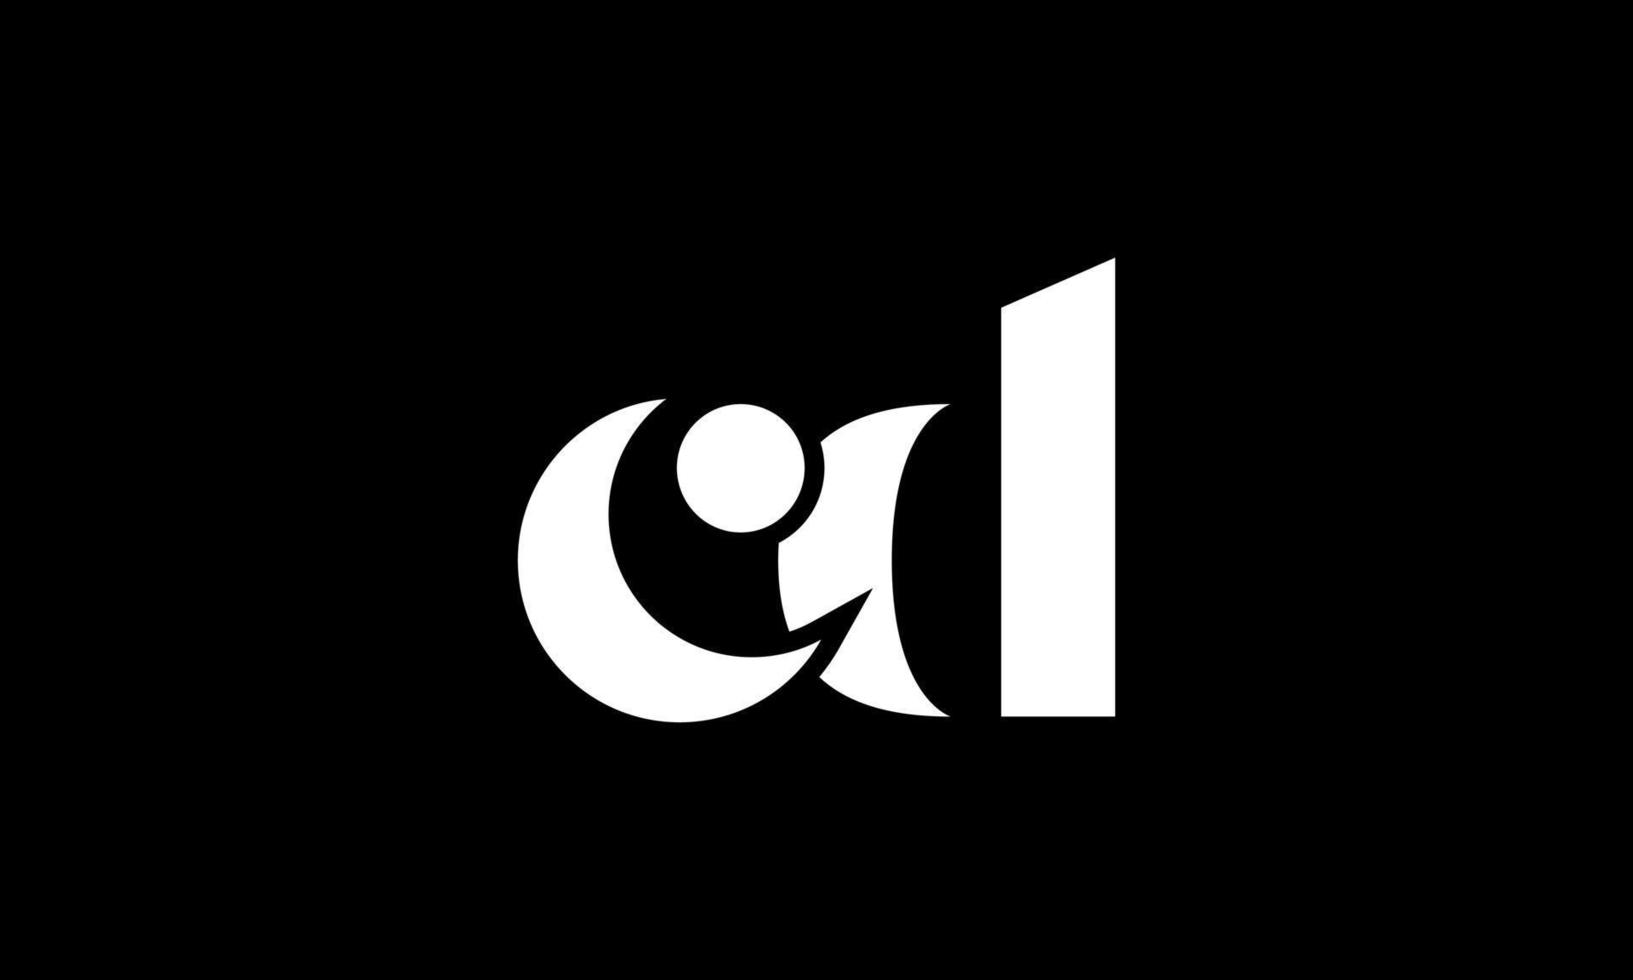 initial letter CD logo design in black background. pro vector. vector